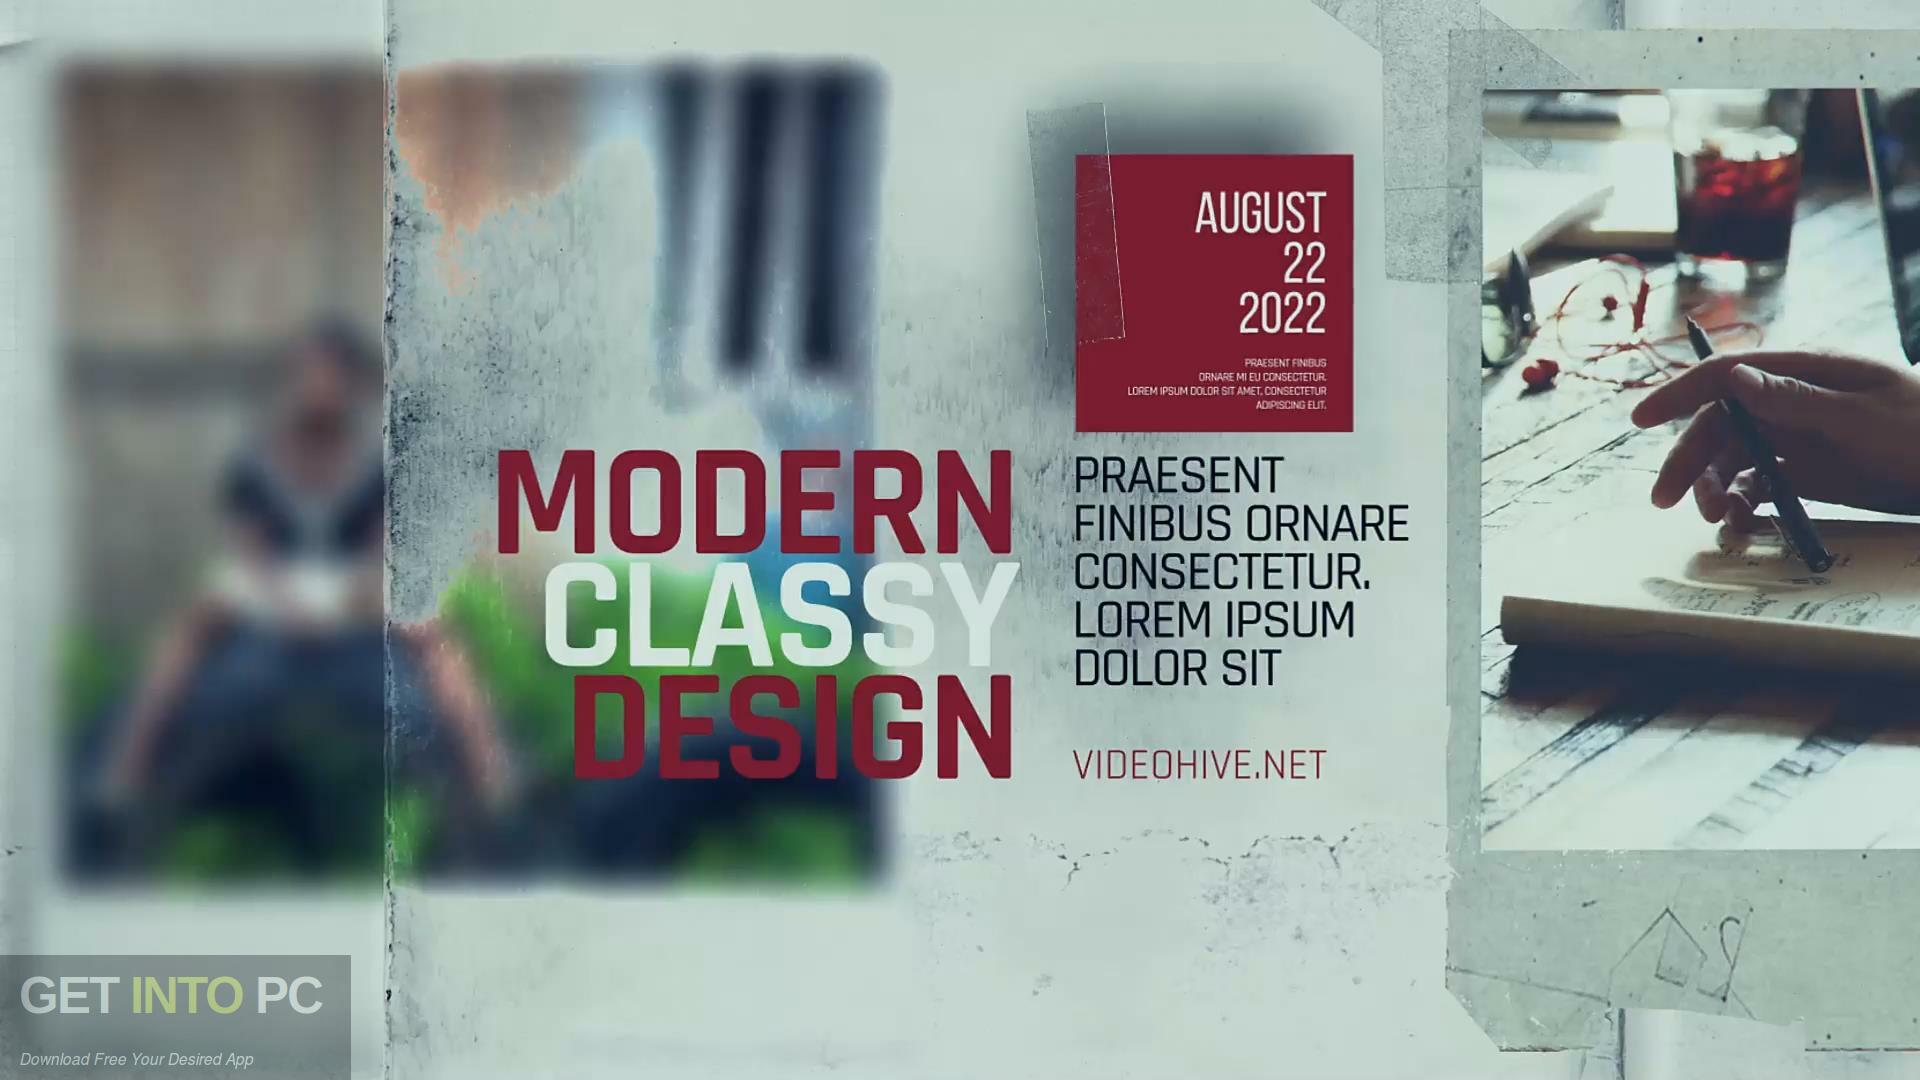 Modern Classy Design [AEP] Free Download